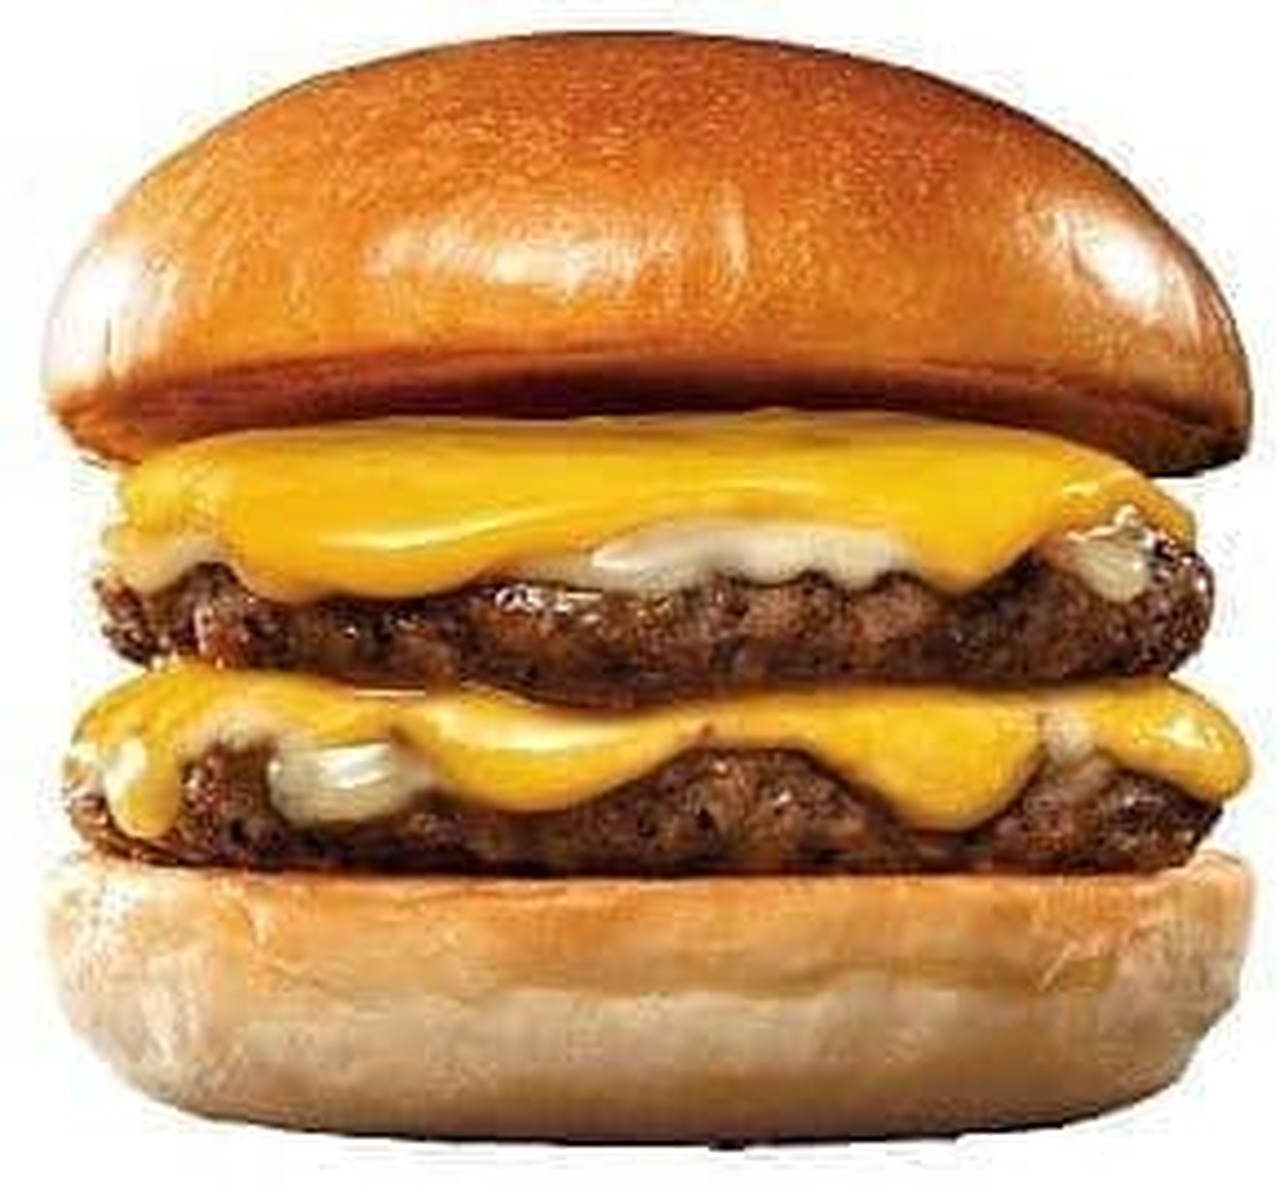 Lotteria "Double exquisite cheeseburger"